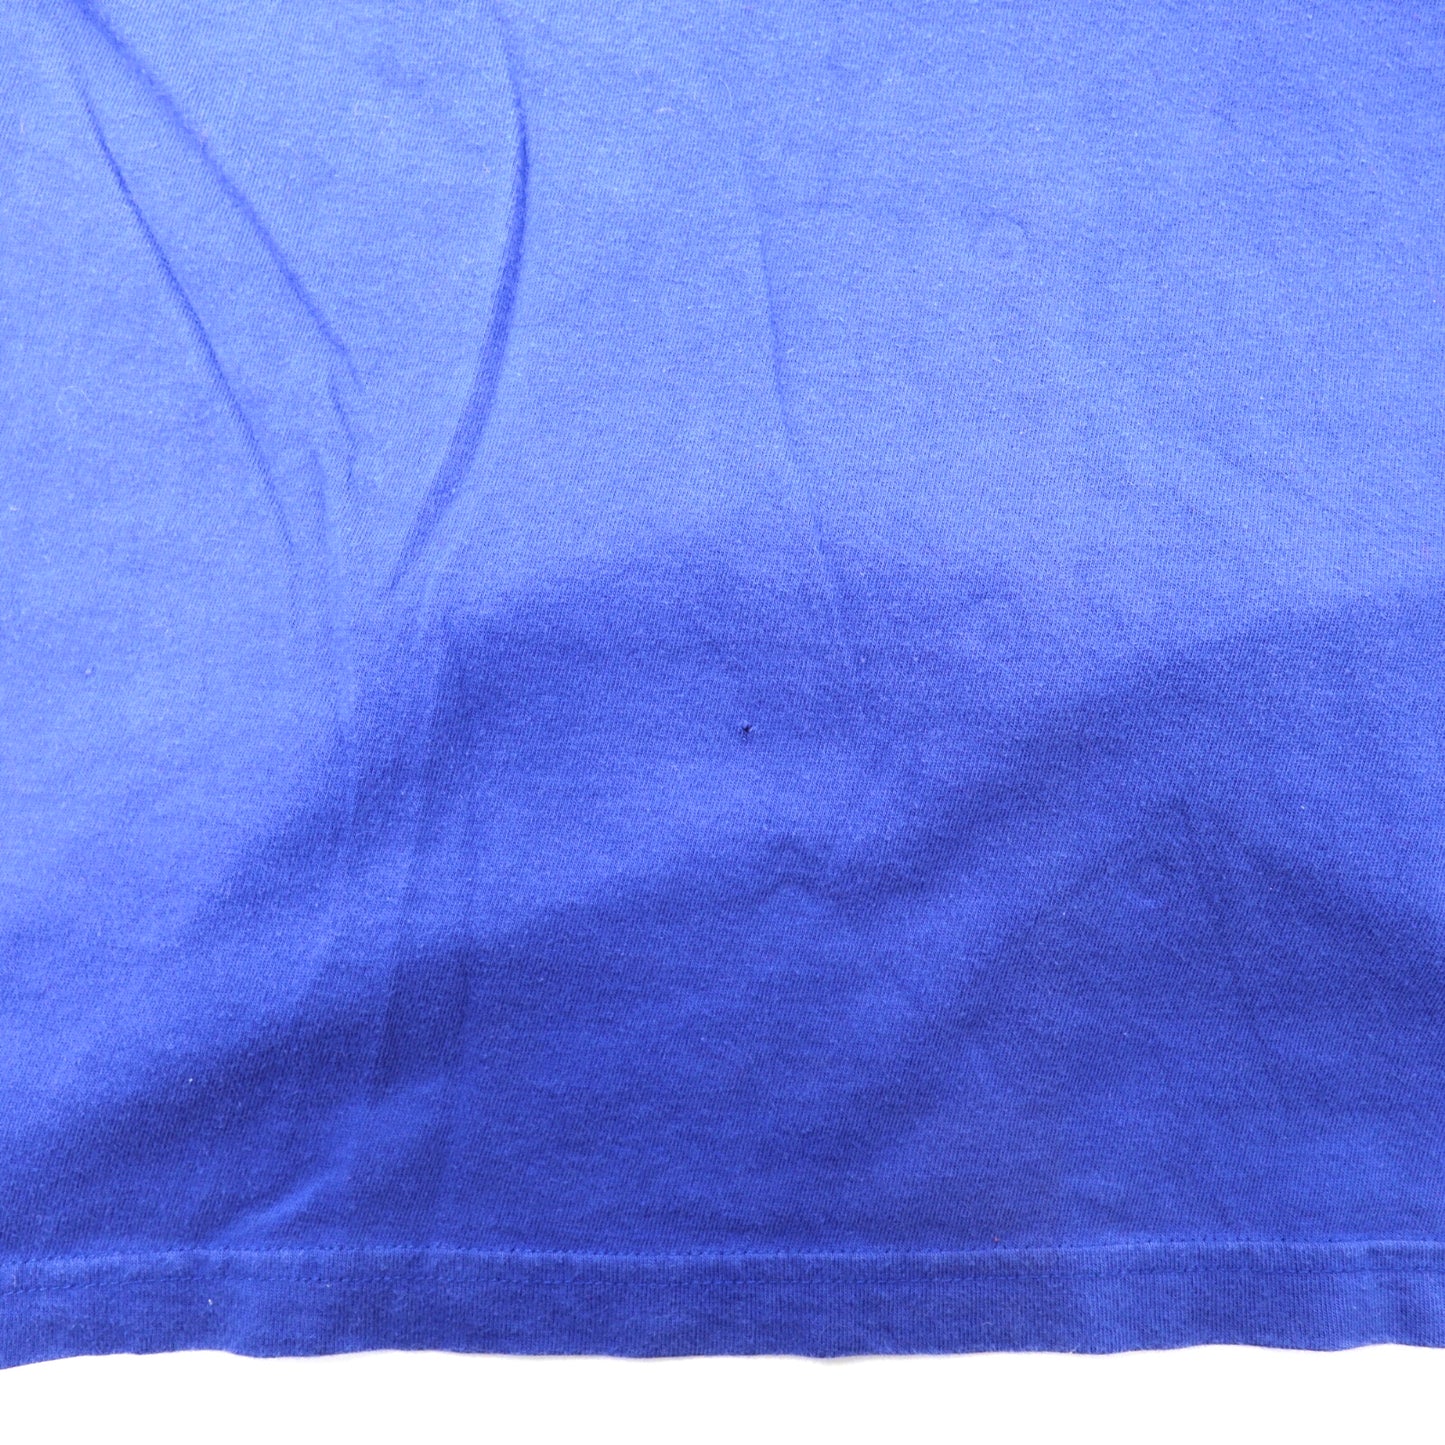 TOMMY HILFIGER Tシャツ L ブルー コットン ロゴプリント 90年代